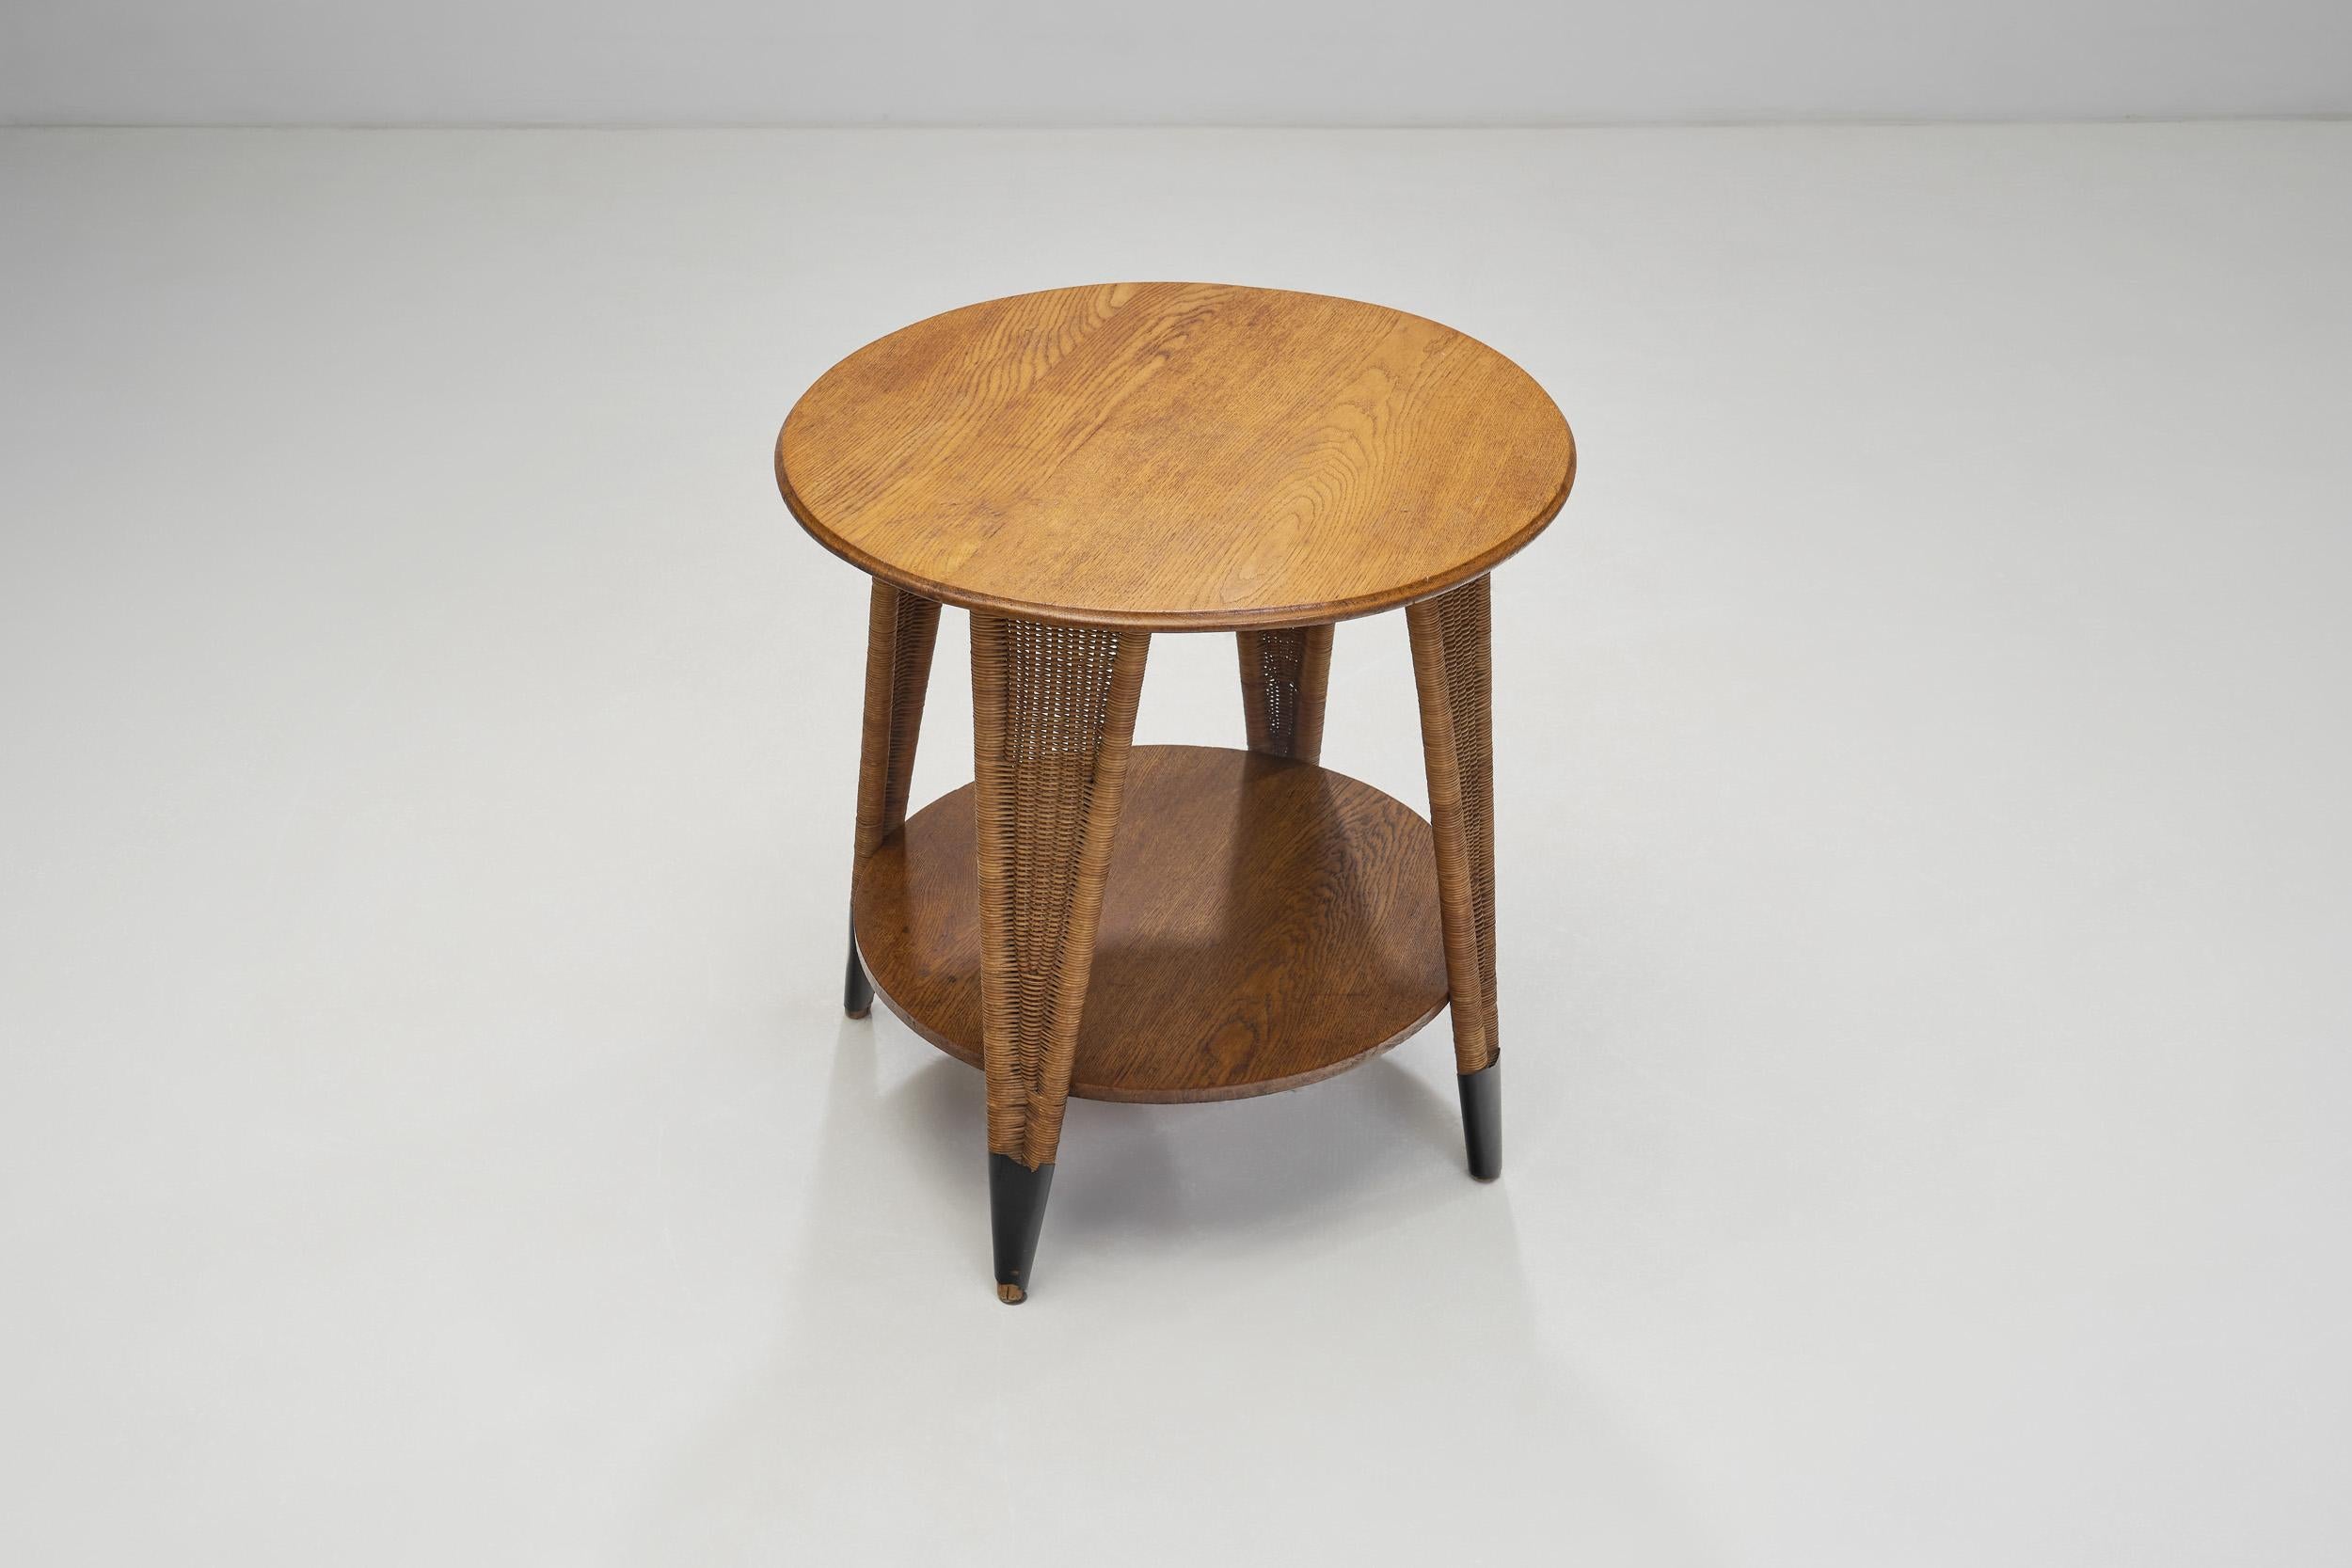 Circular Oak Coffee Table With Wicker Legs, Europe 20th Century 1